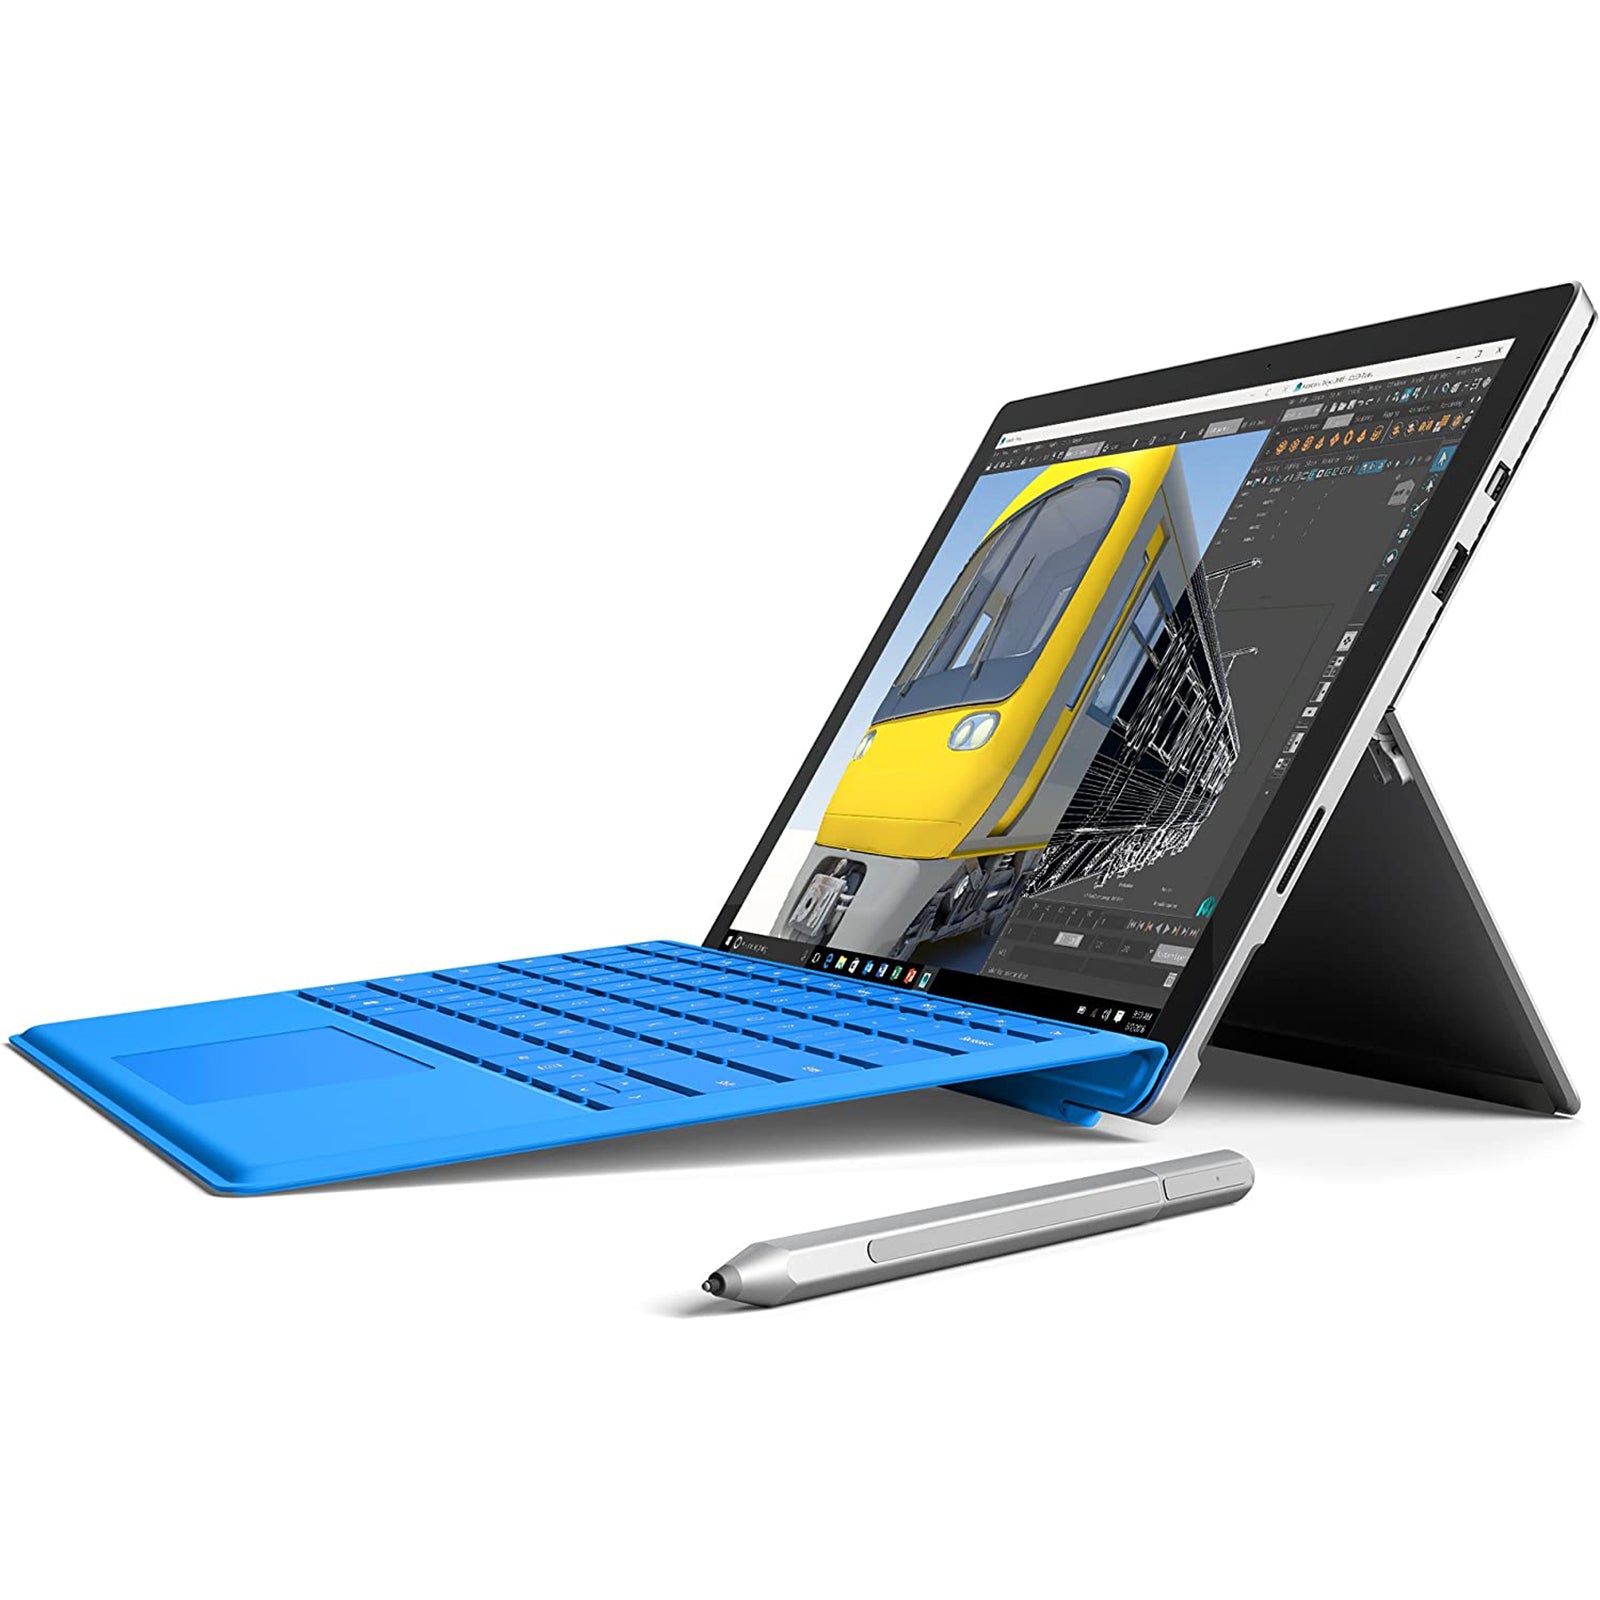 lugt score Stærk vind Microsoft Surface Pro Touchscreen Laptop Intel Core